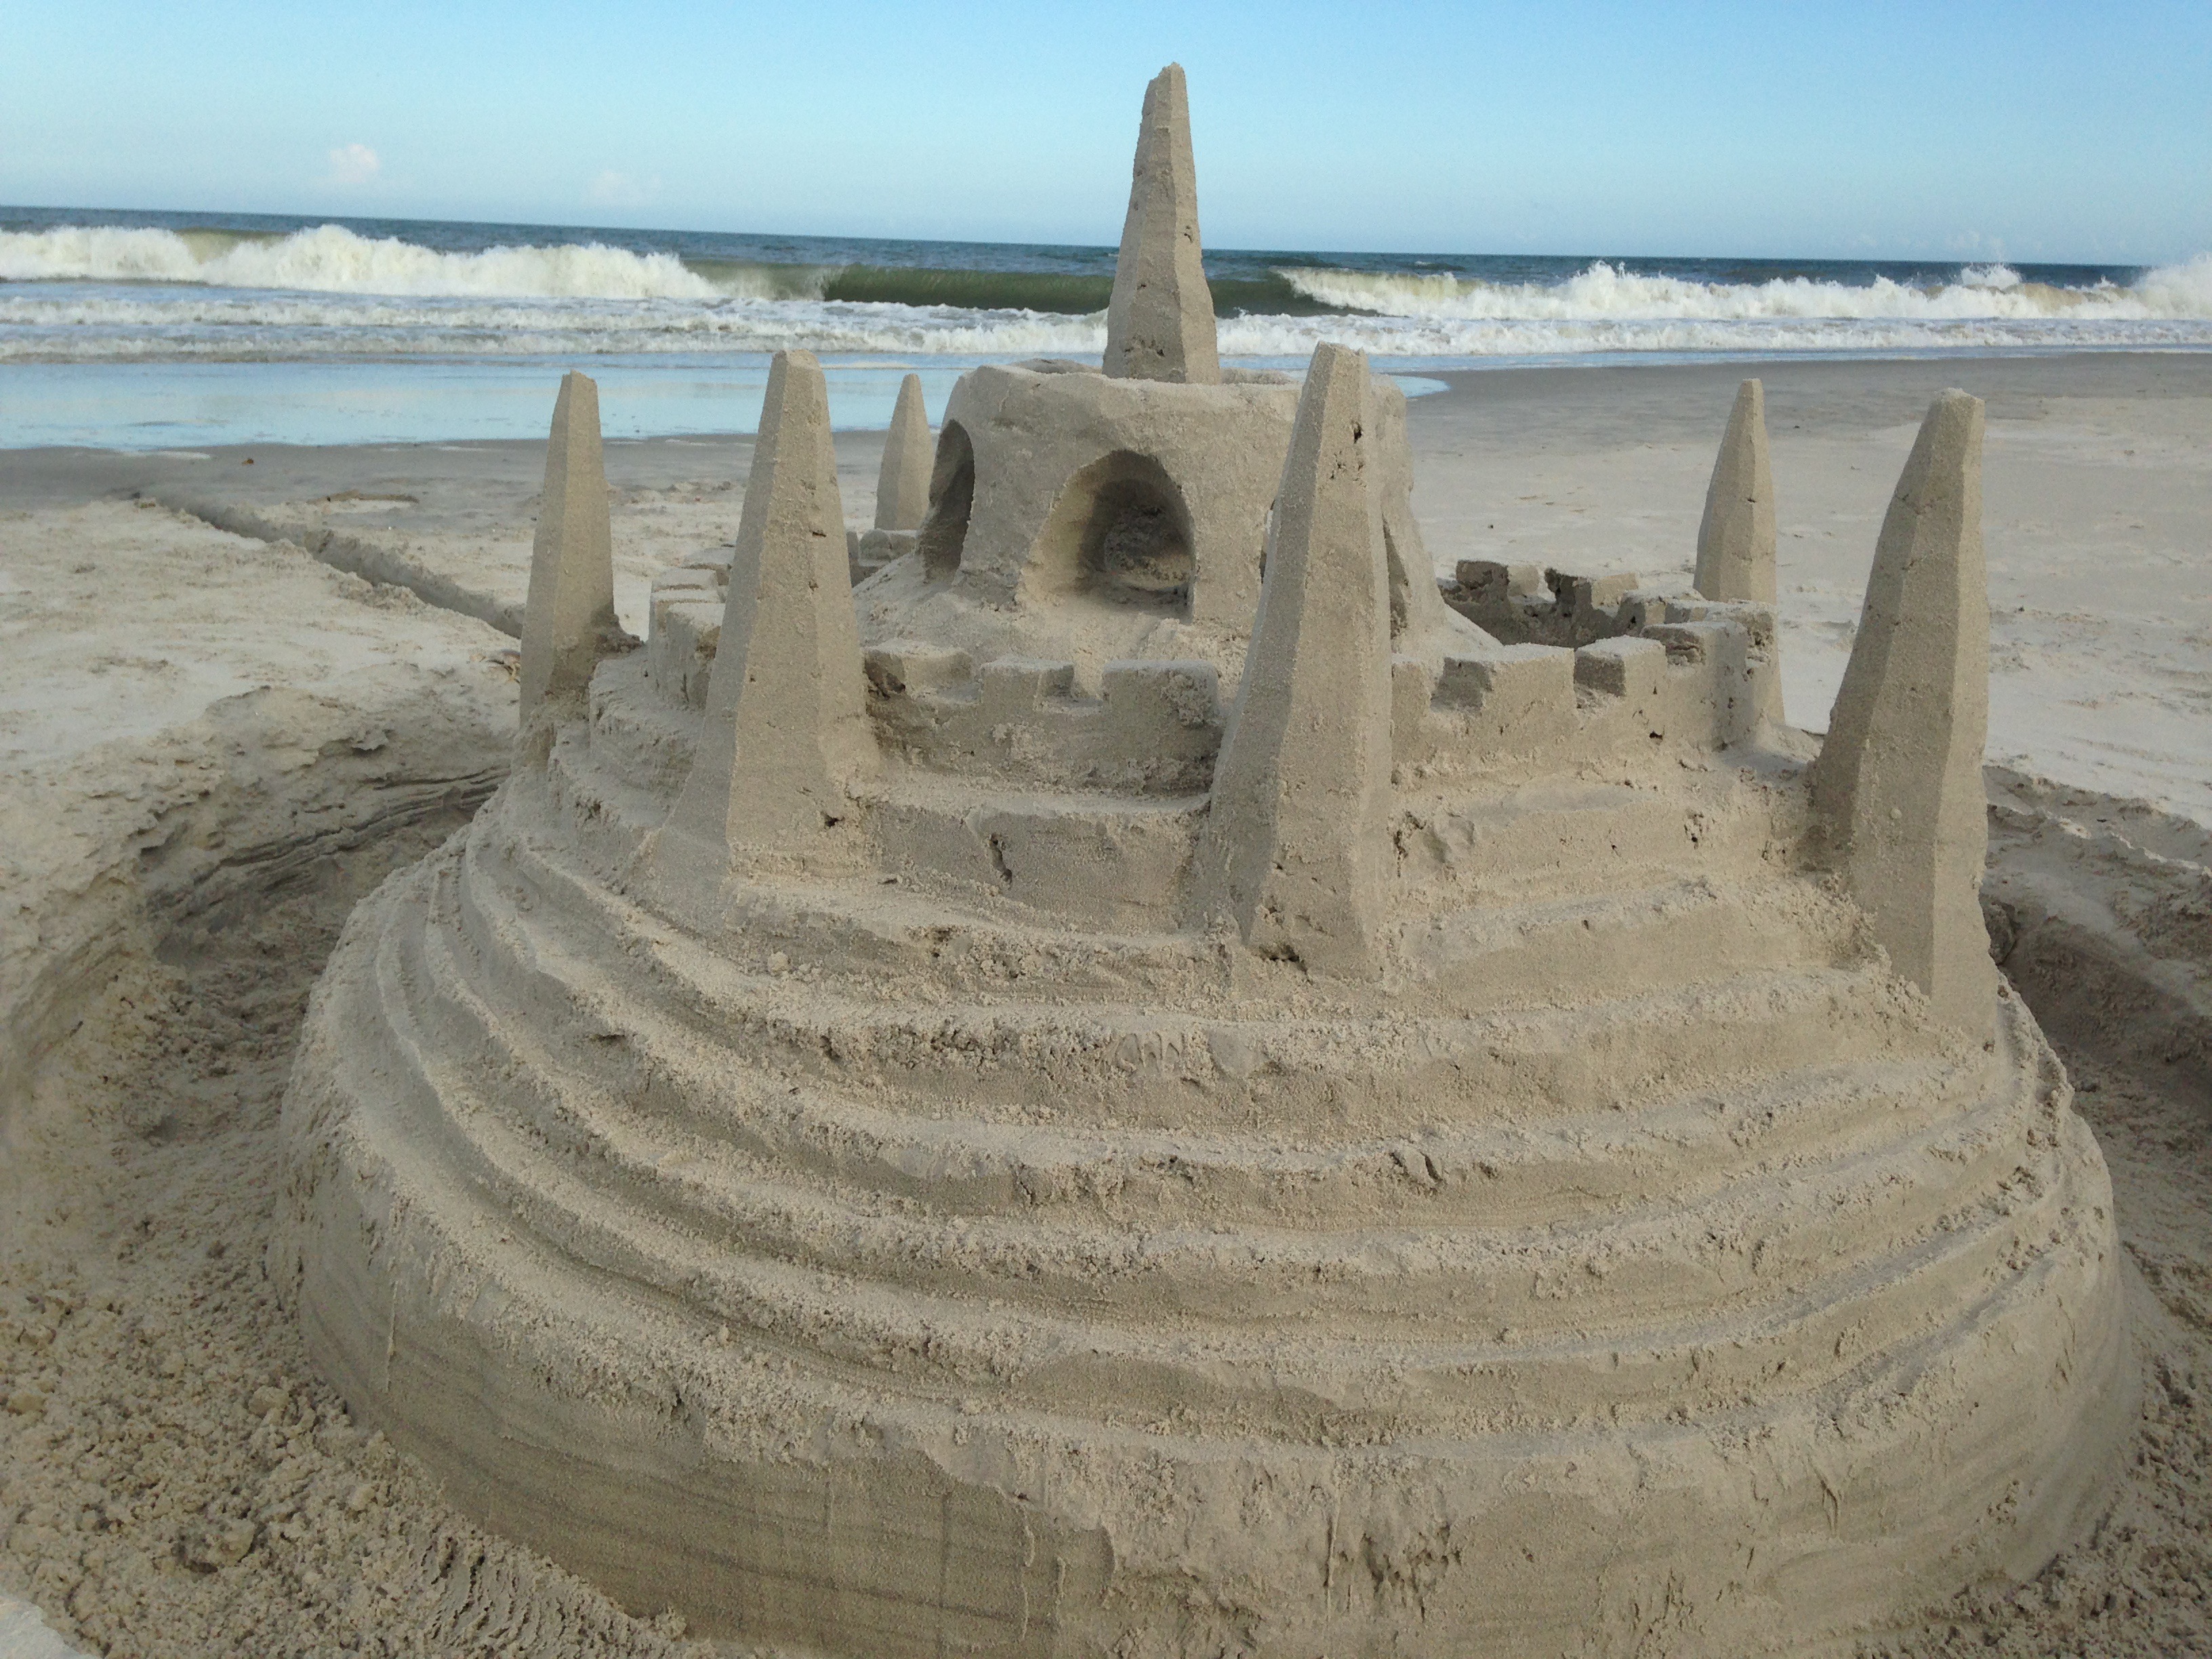 Sandcastle - Back view